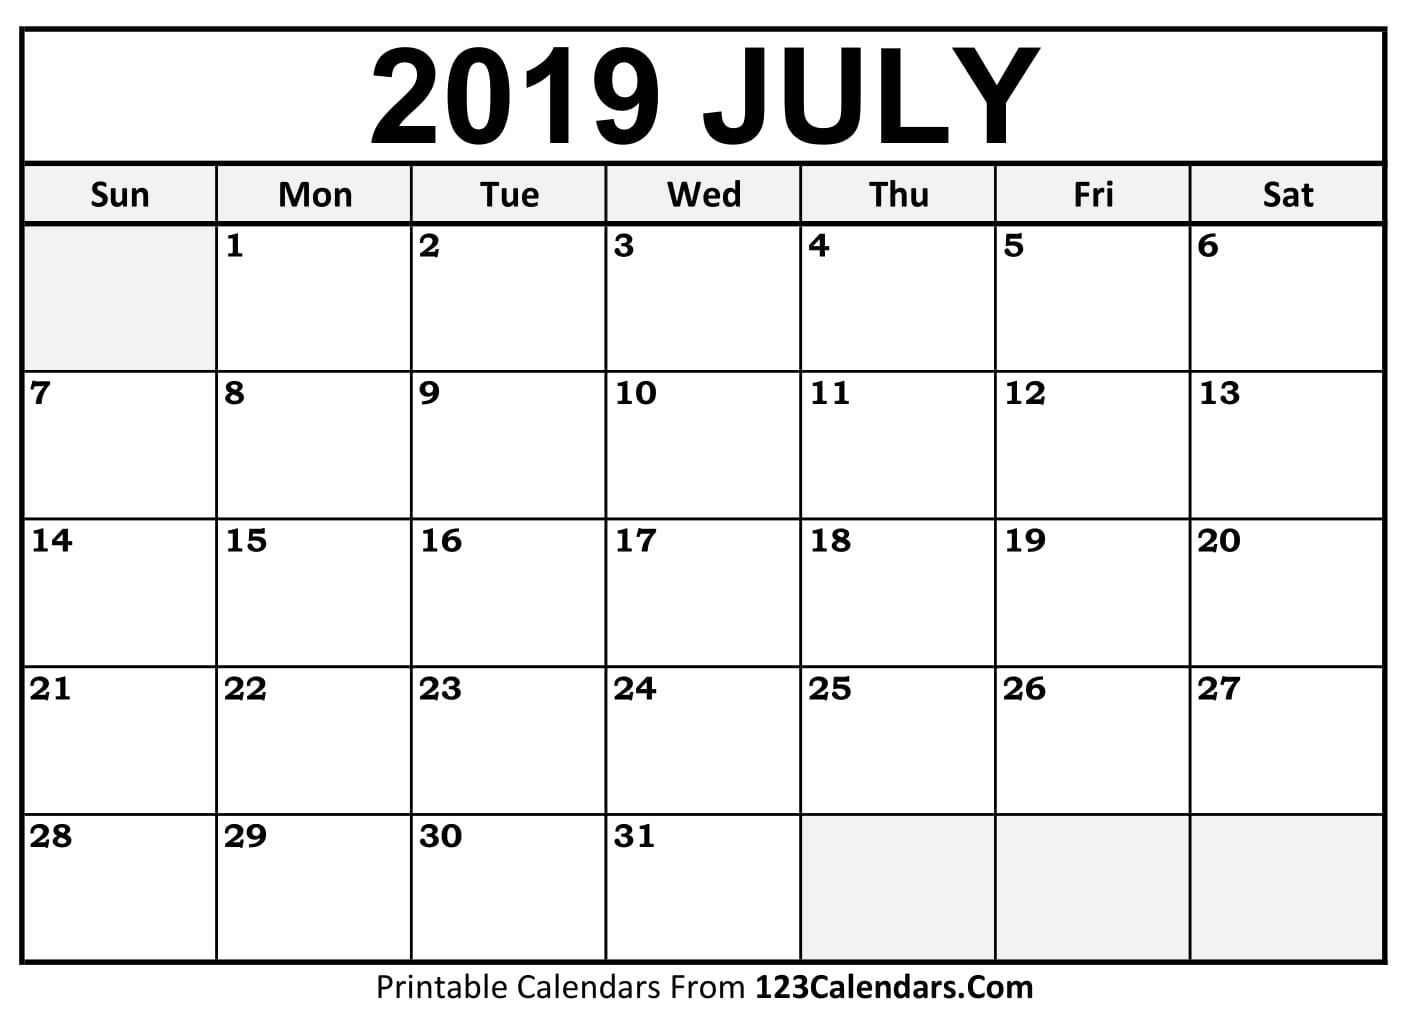 Free 5 July 2018 Calendar Printable Template Source Template